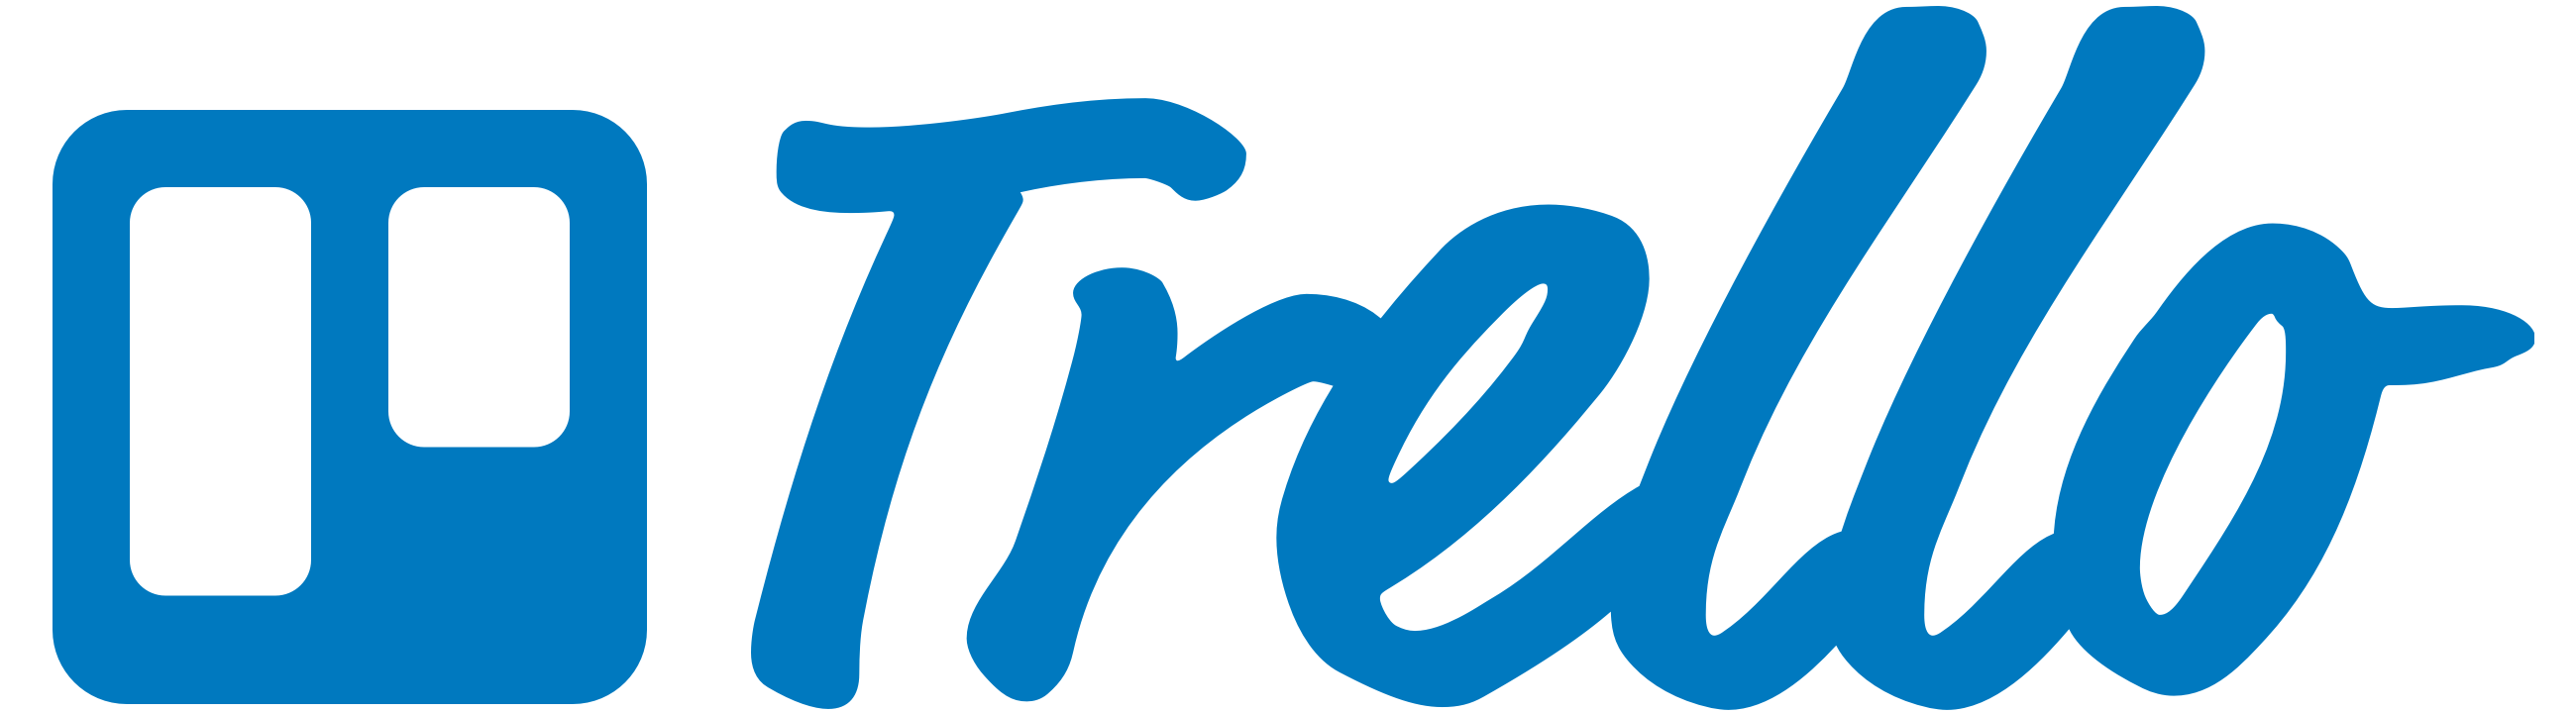 trello-logo-blue-flat